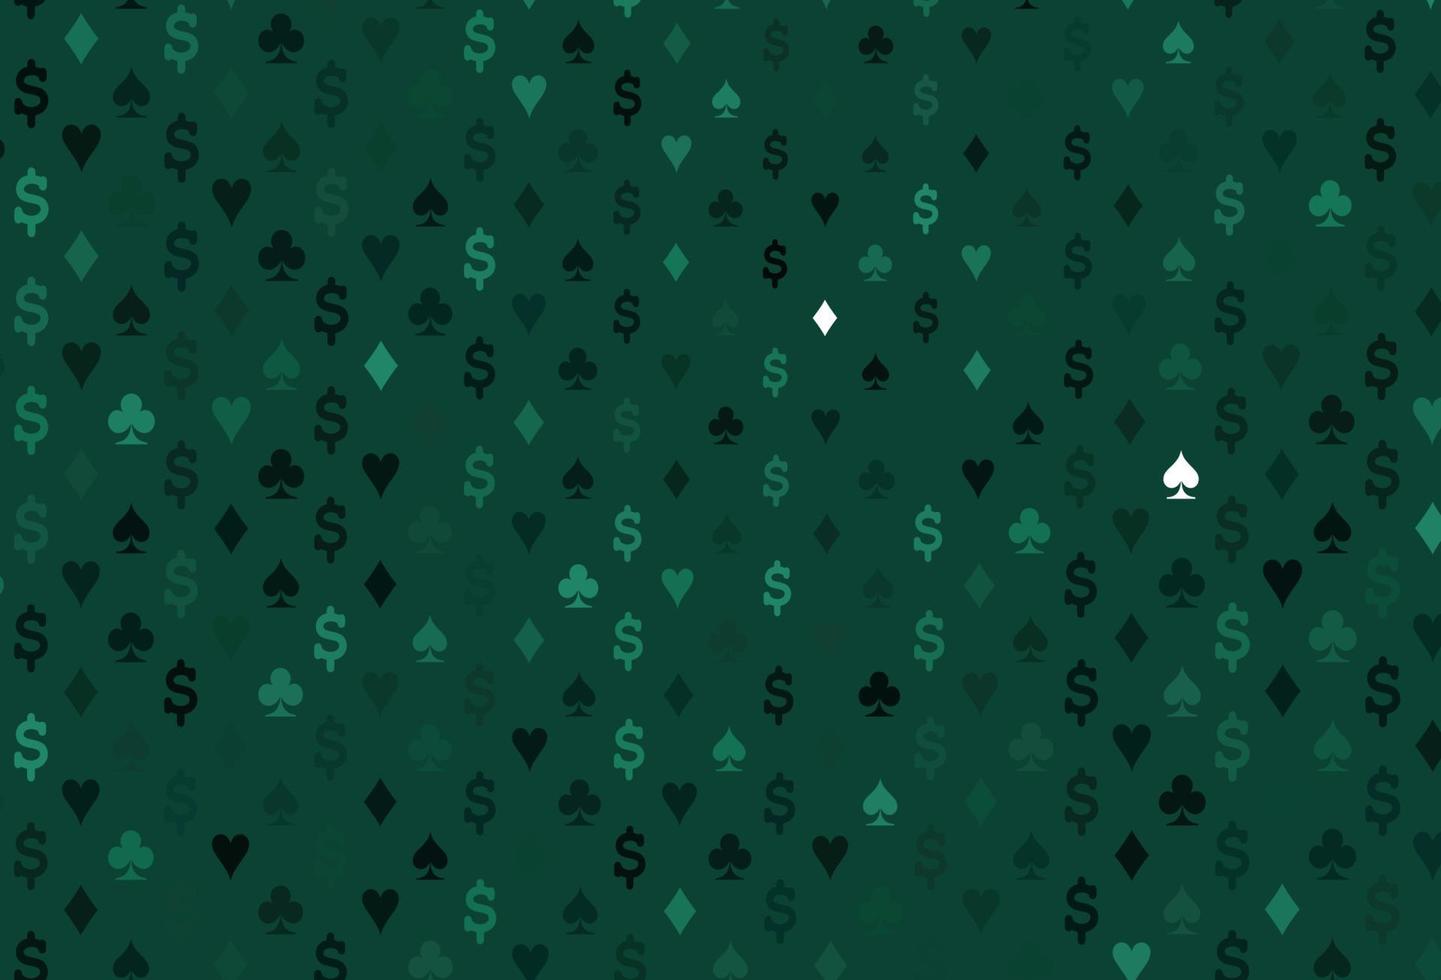 layout de vetor verde claro com elementos de cartas.